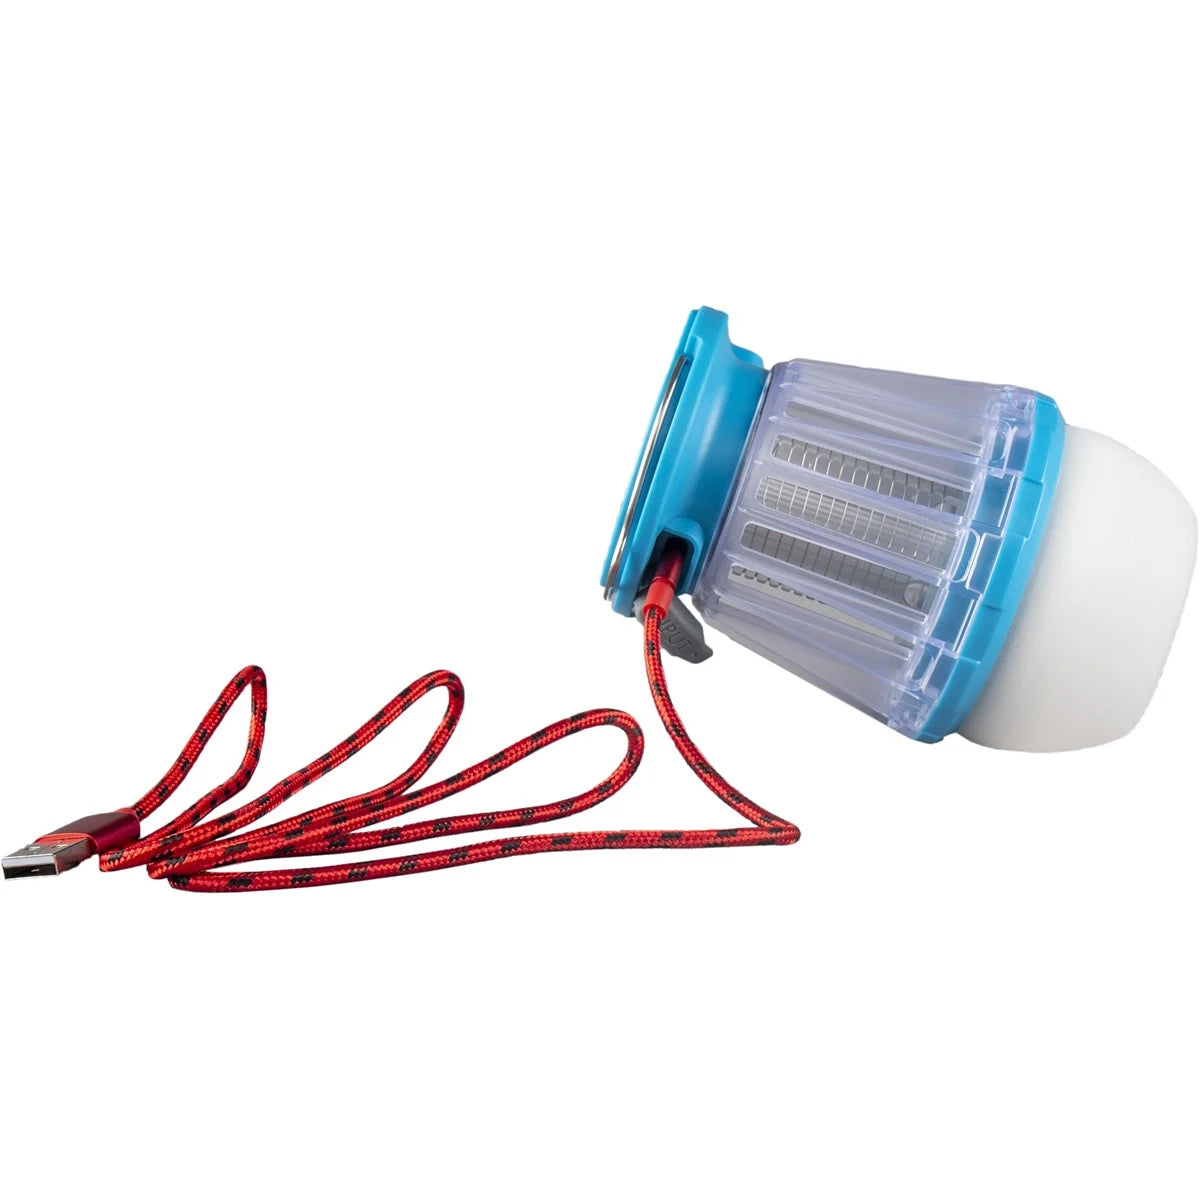 Rubytec Buzz USB Solar Lantern & Mosquito Catcher Blue Tentlamp - Reisartikelen-nl